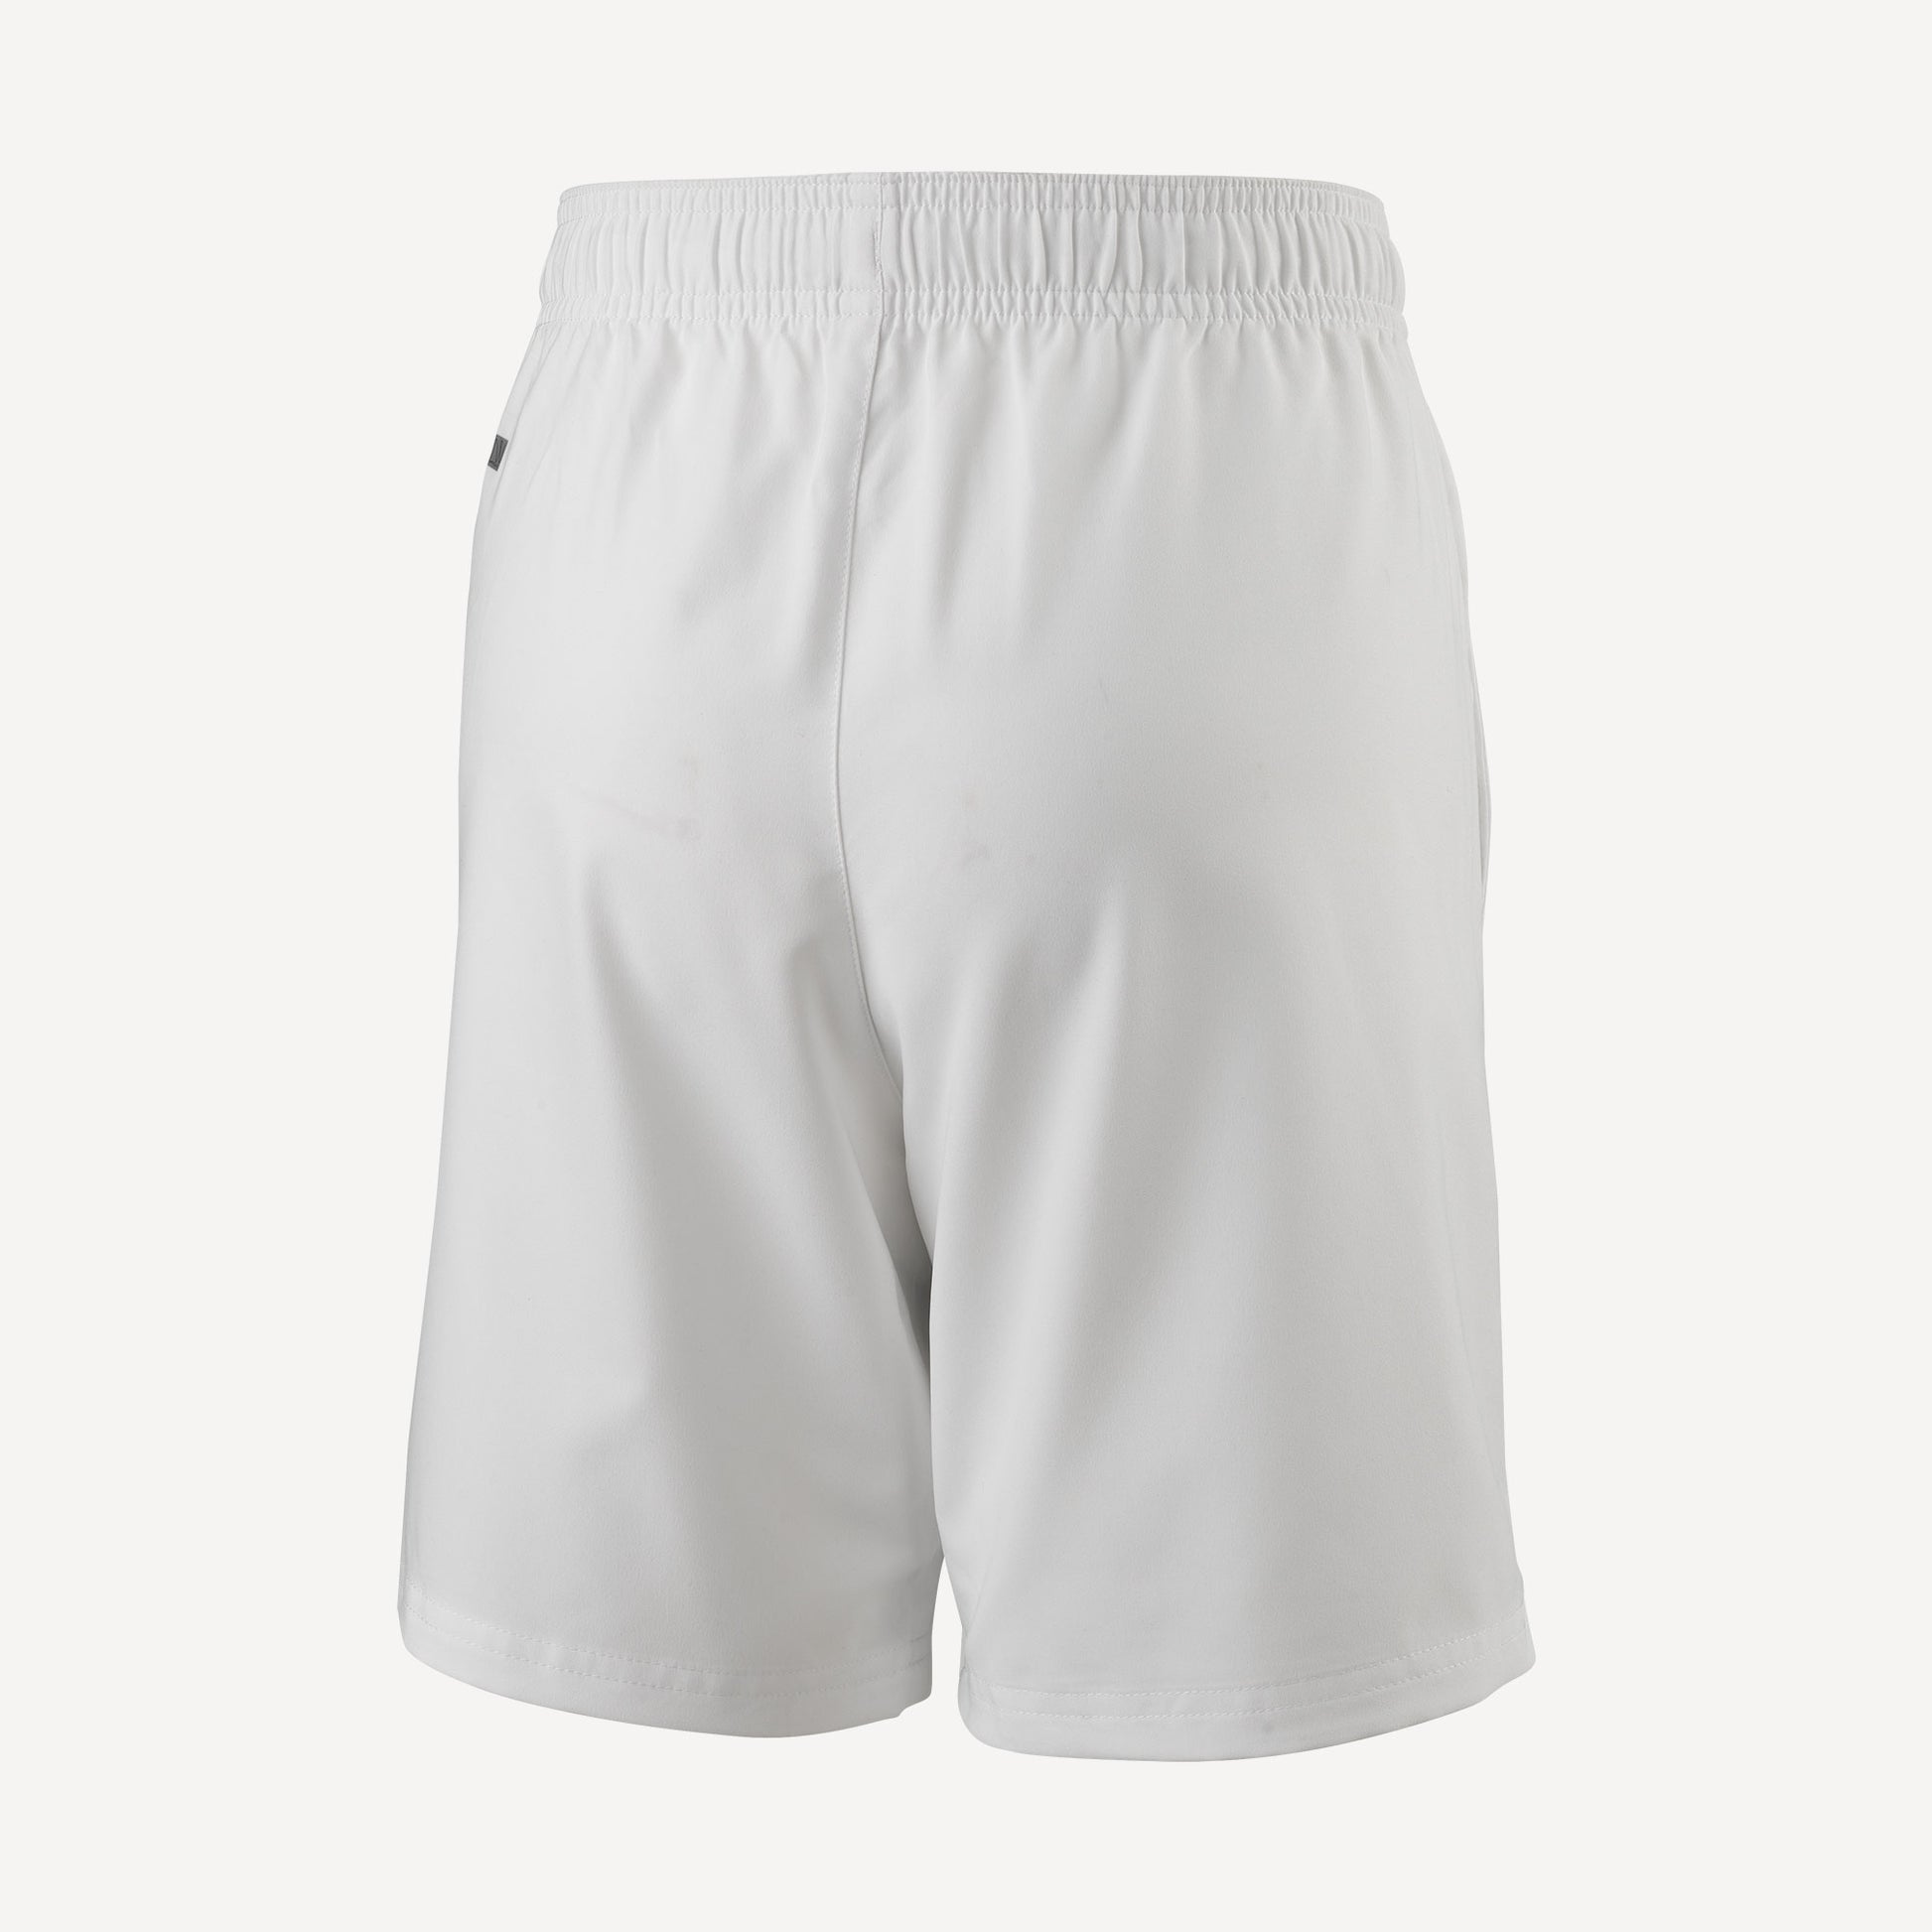 Wilson Team 2 Boys' 7-Inch Tennis Shorts White (2)